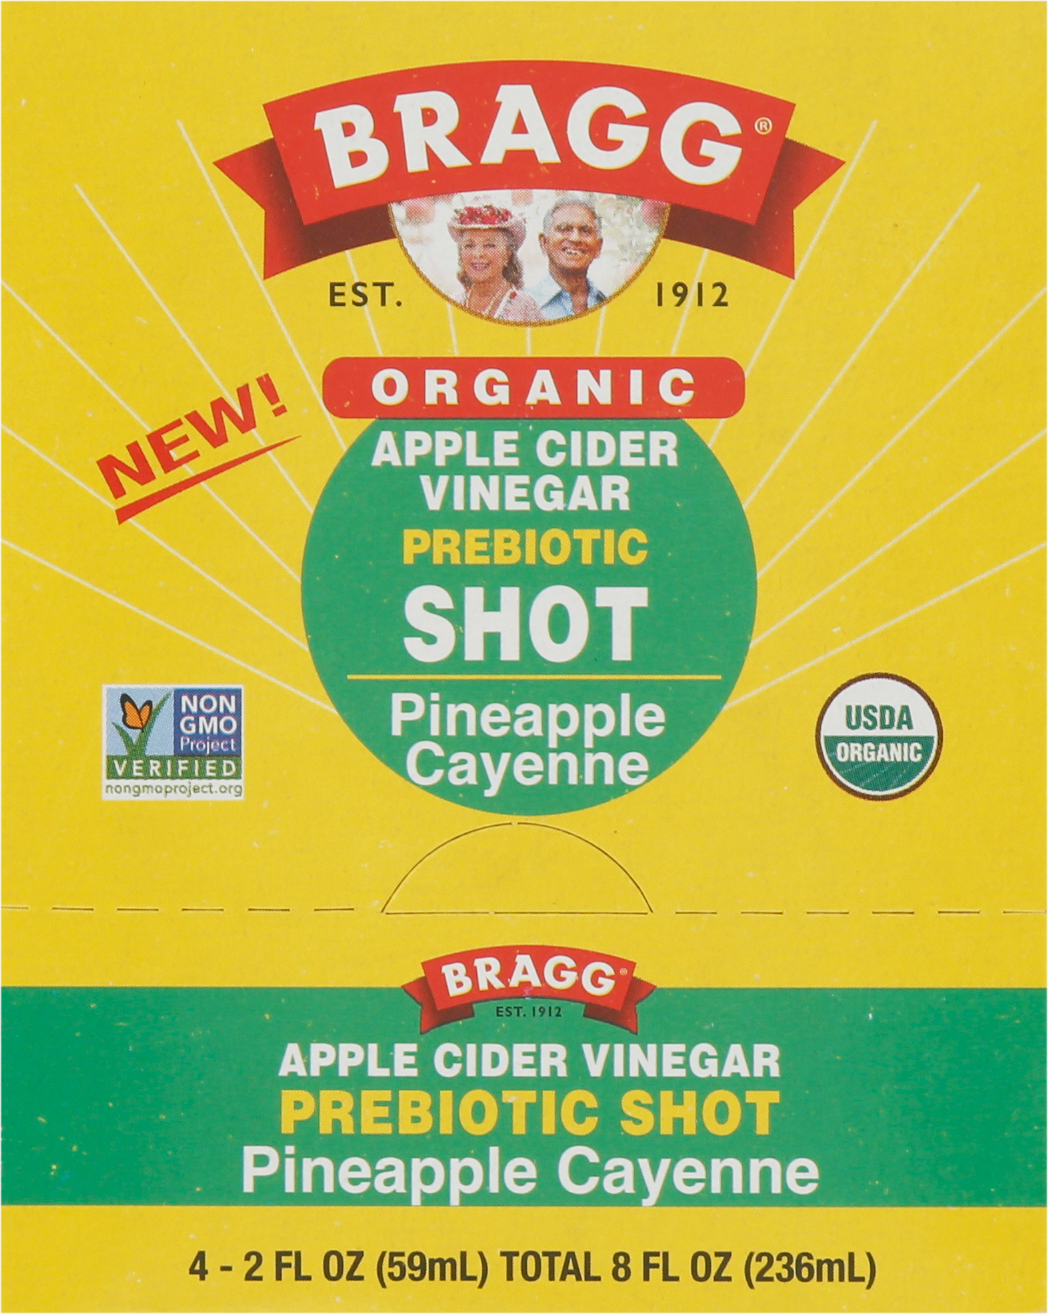 Prebiotic Shot, Organic, Apple Cider Vinegar, Pineapple Cayenne image